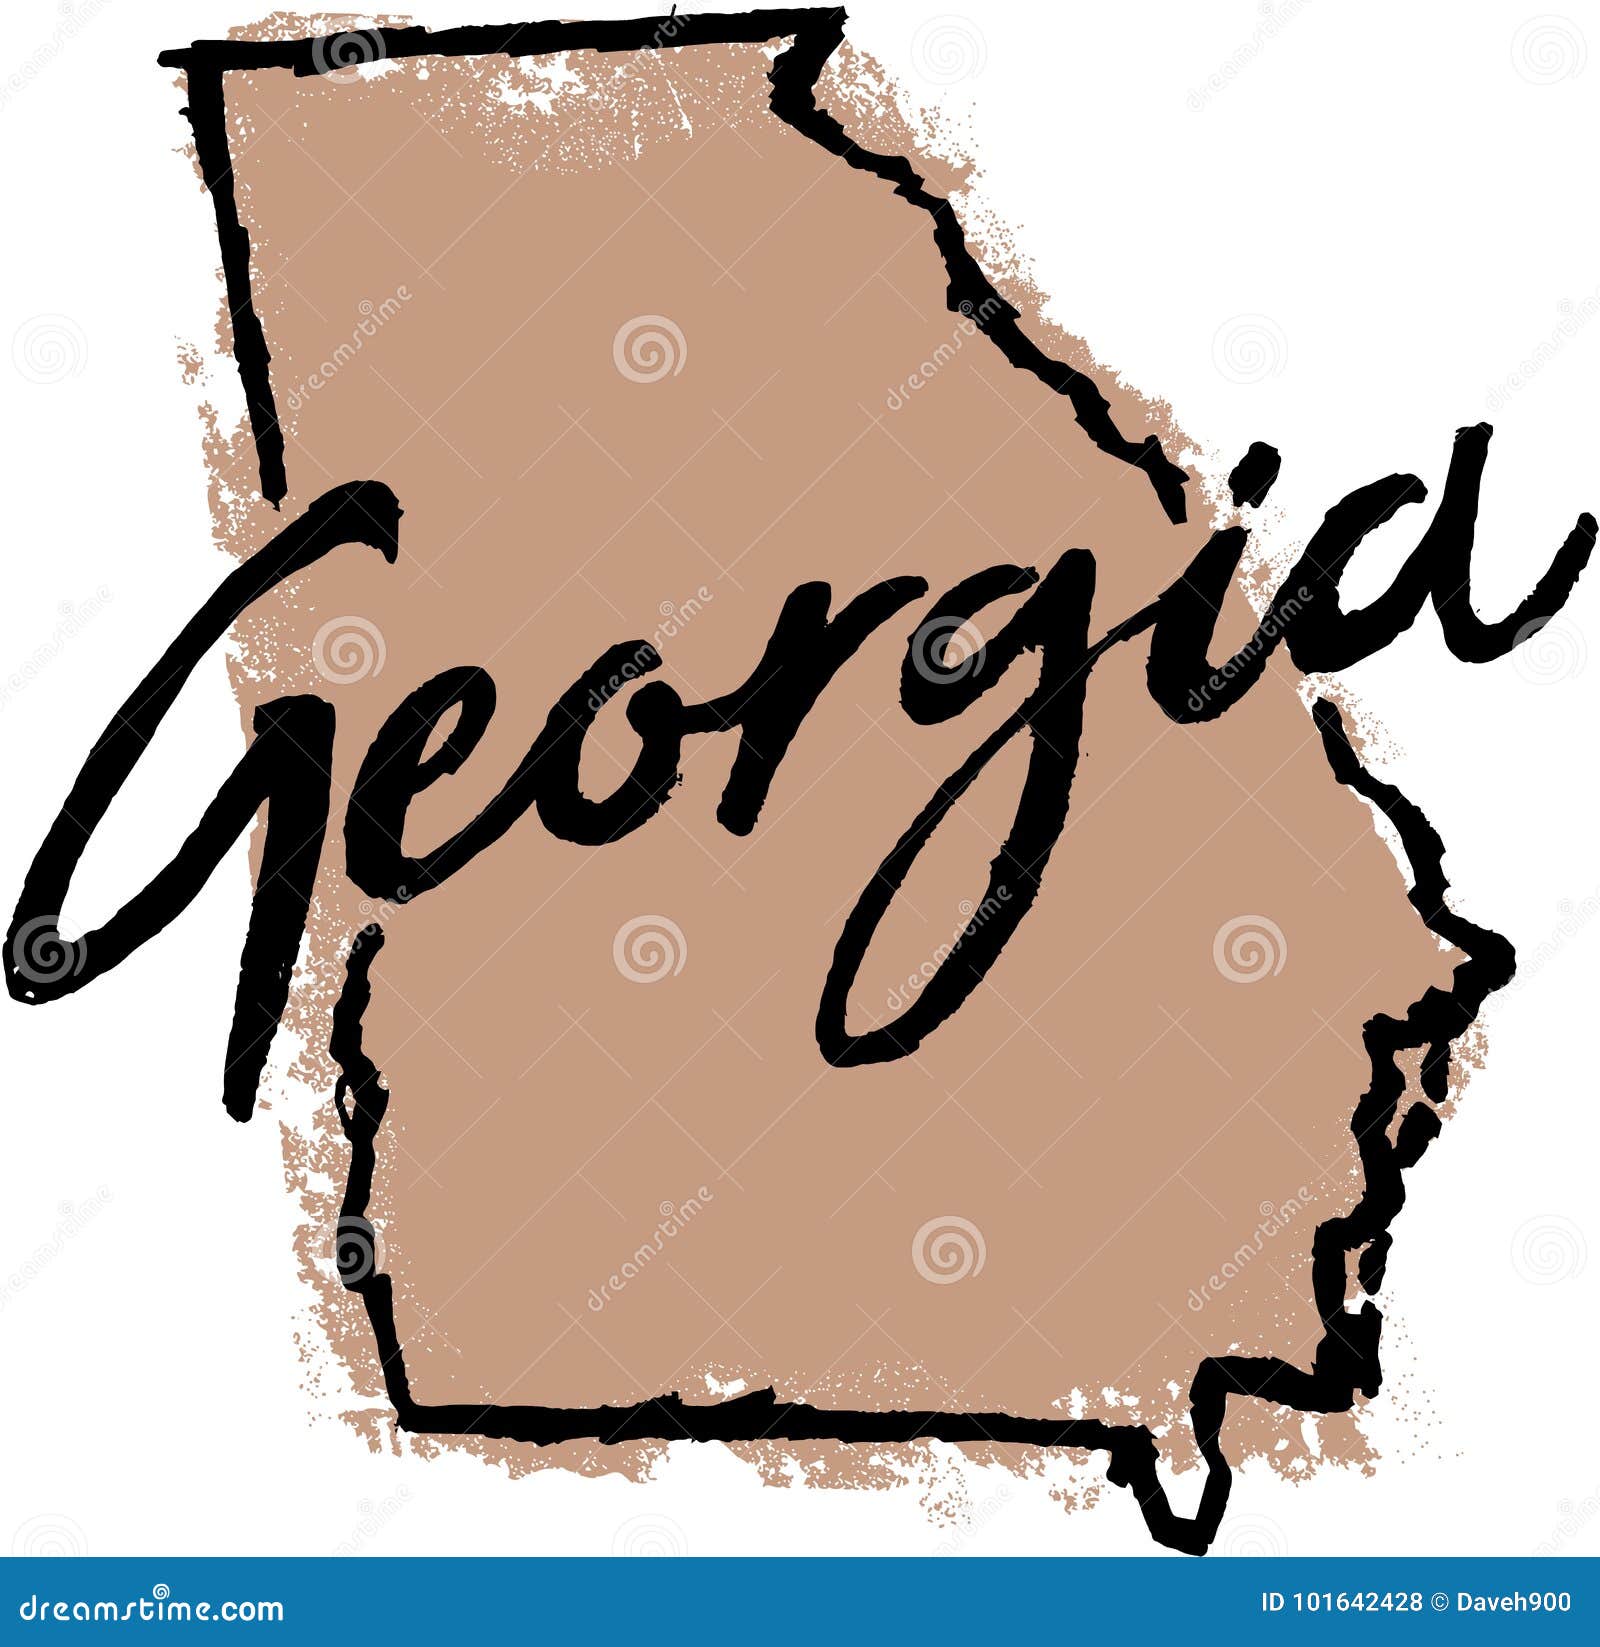 georgia state of